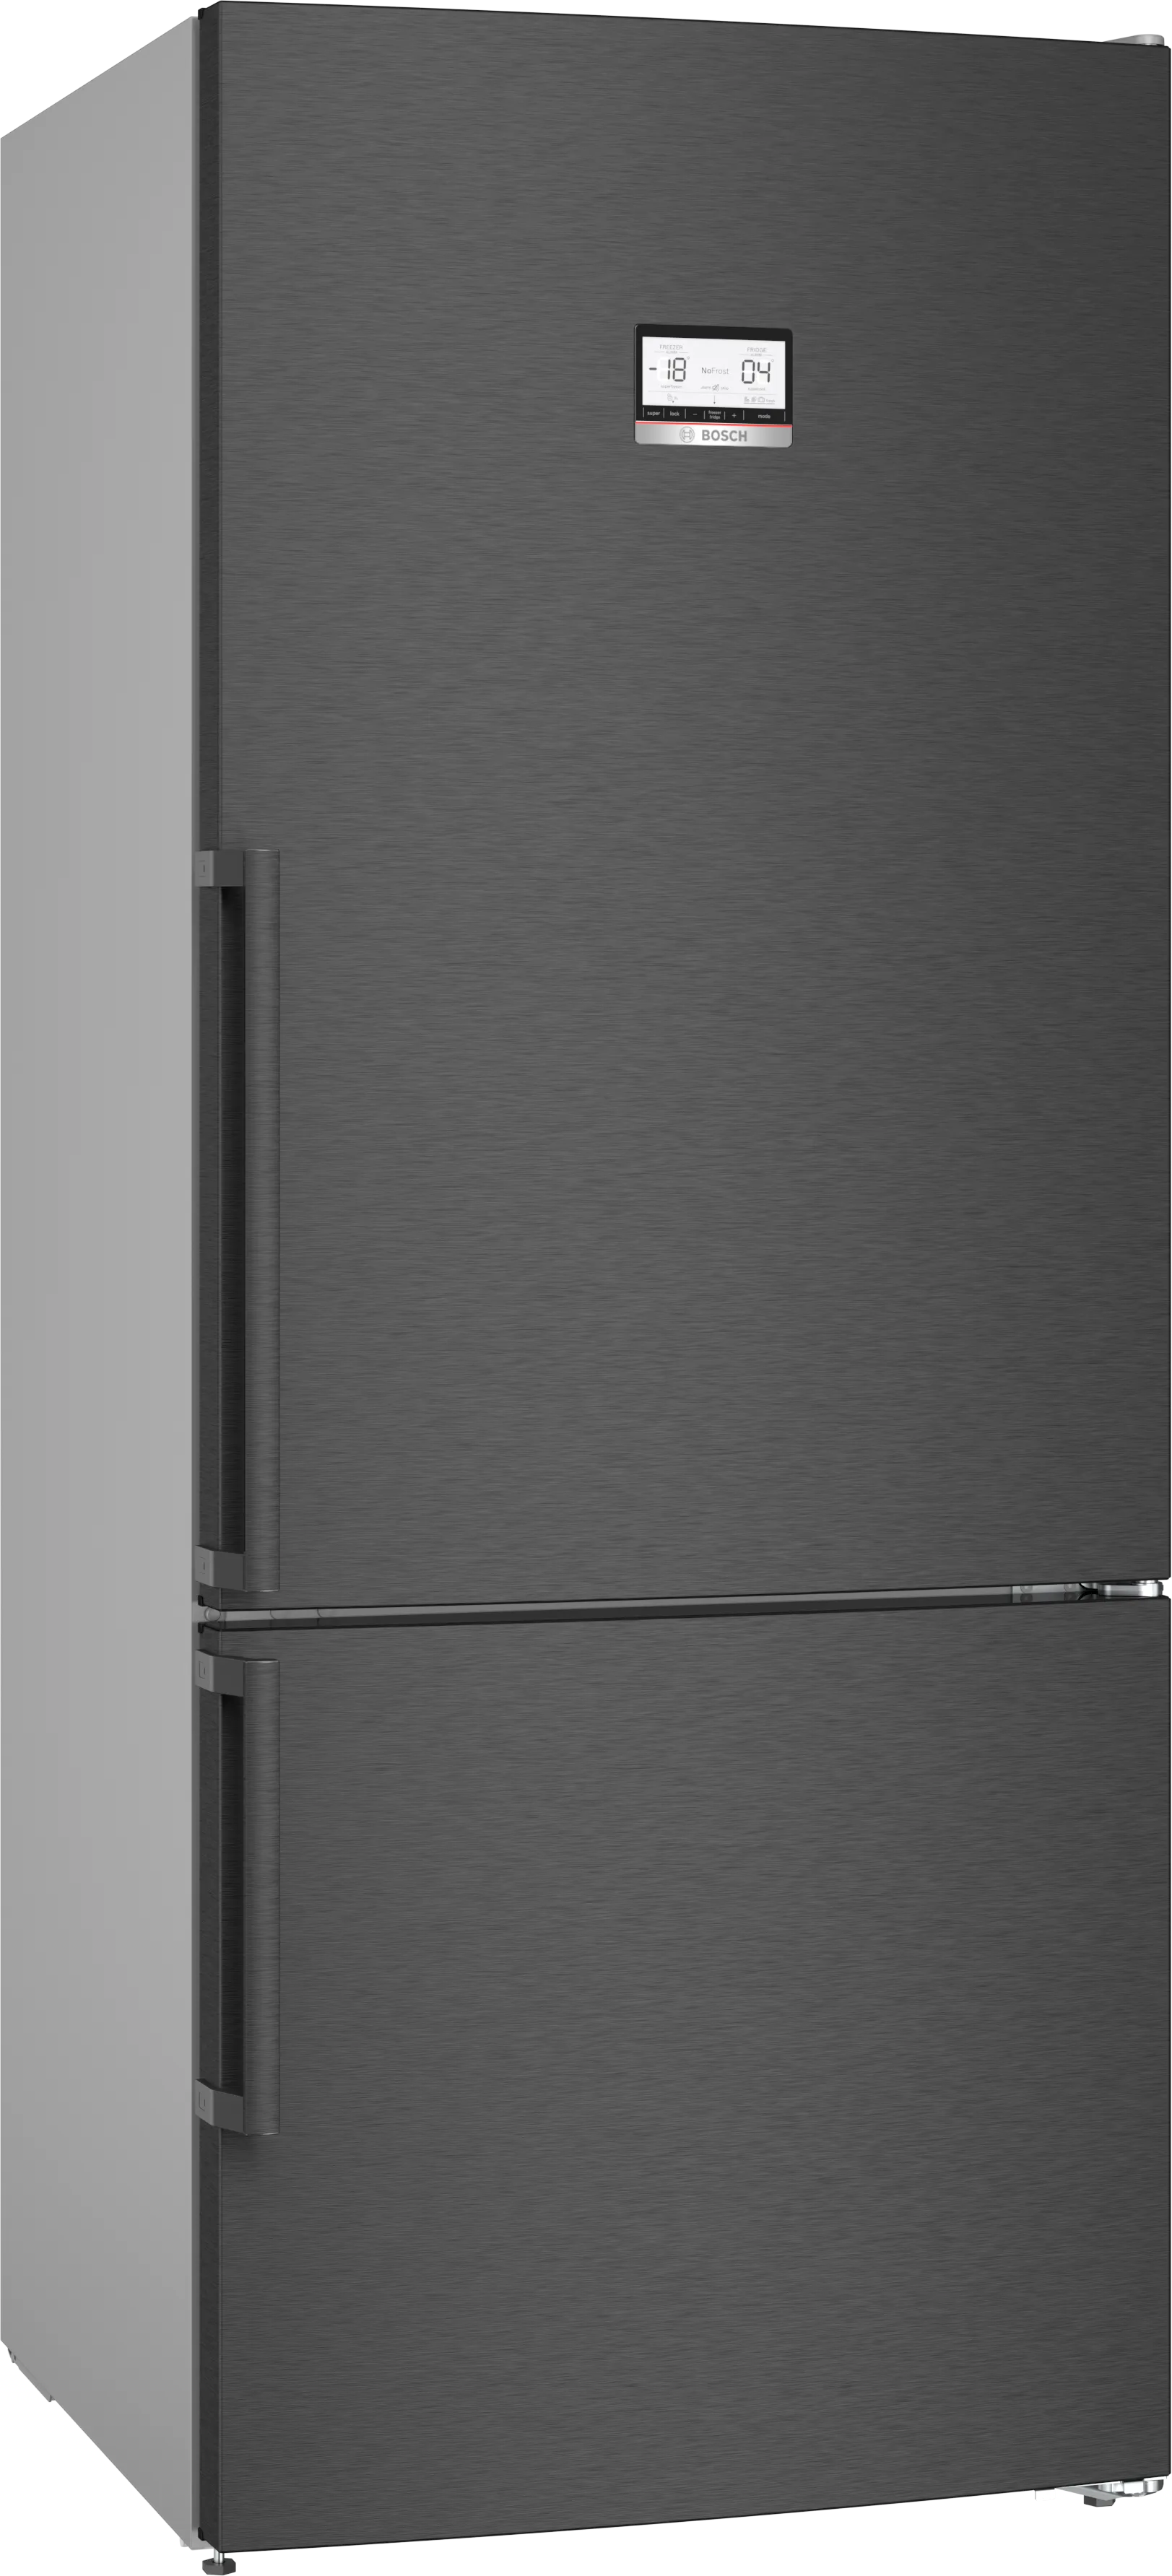 Series 6 free-standing fridge-freezer with freezer at bottom 186 x 75 cm Black stainless steel 